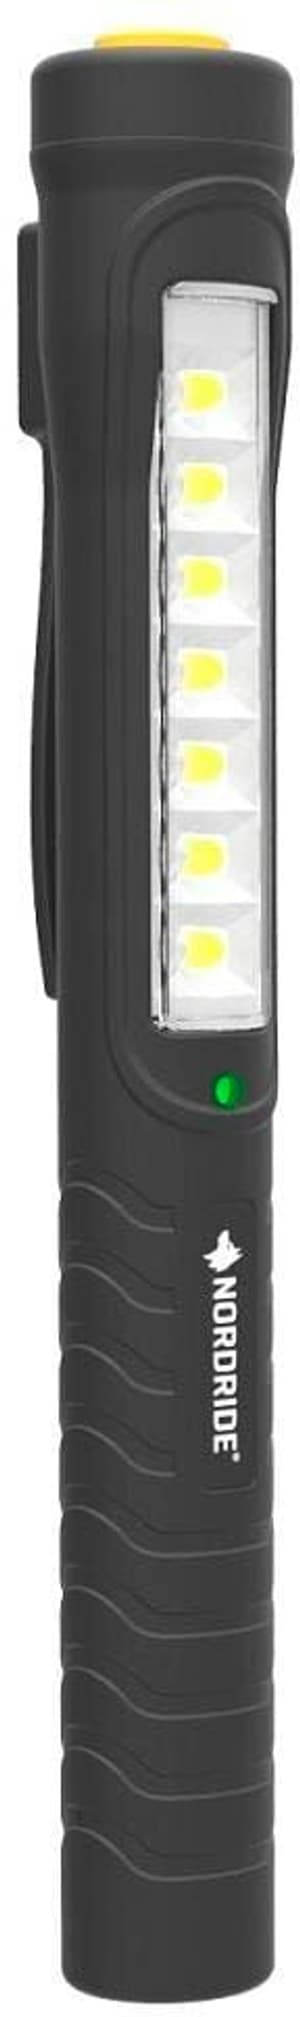 Lampe portative LED SMD Pen Light 90 lumens, IP20, avec aimant